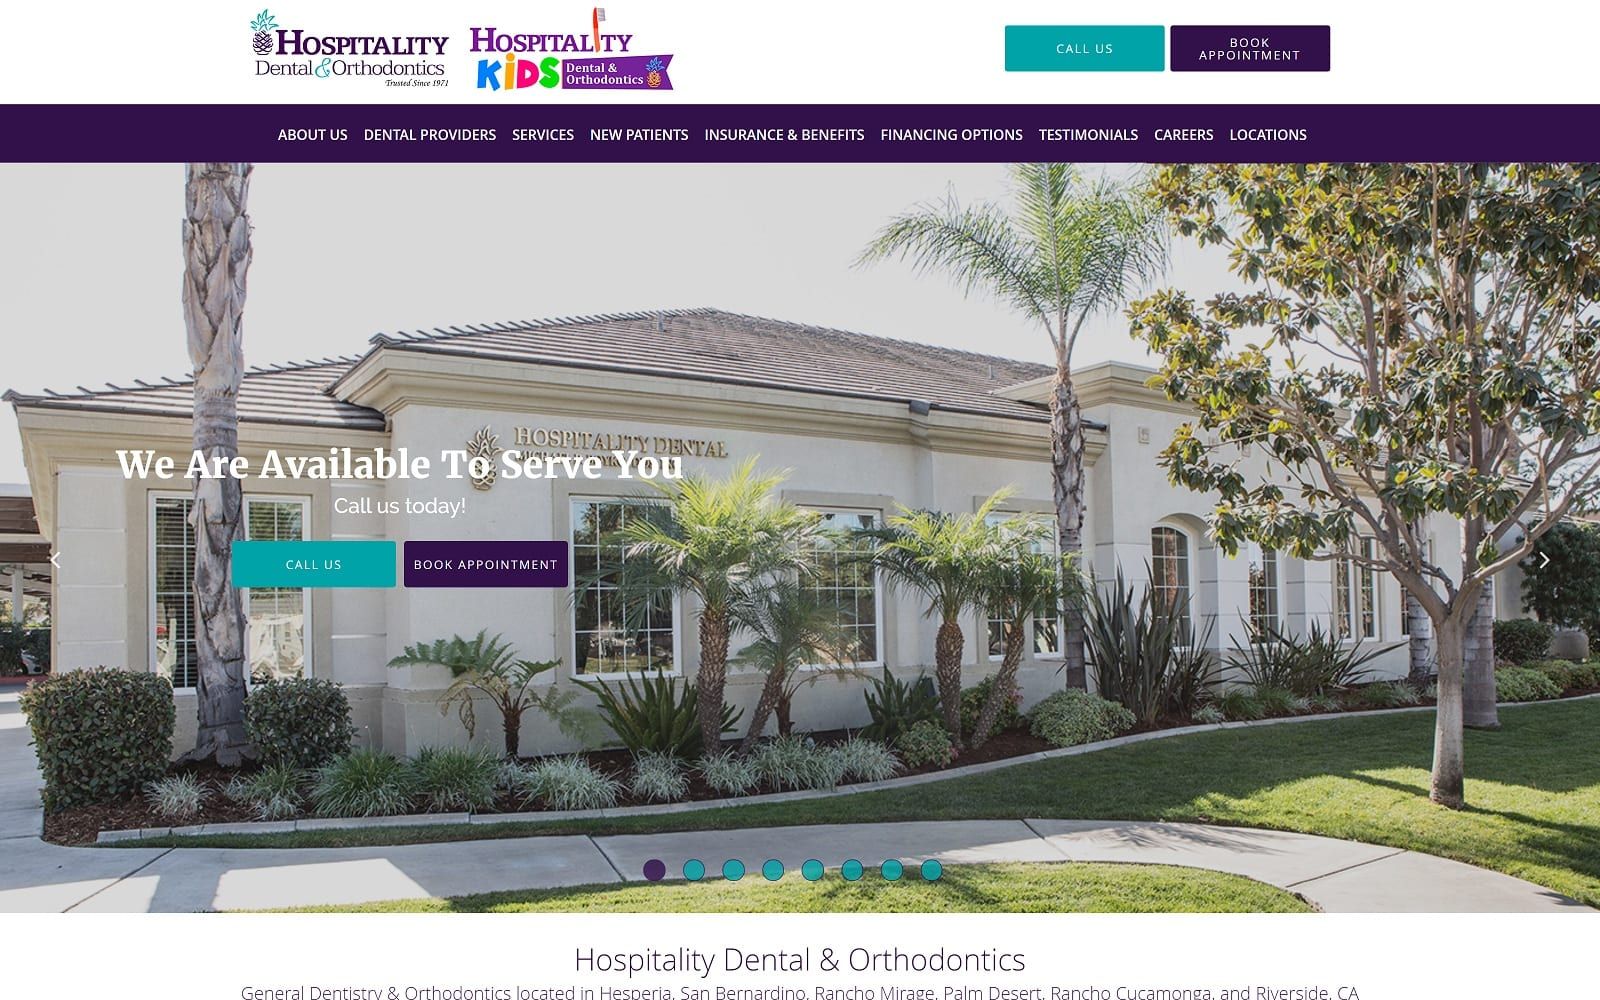 The screenshot of hospitality dental & orthodontics hospitalitydental. Com website